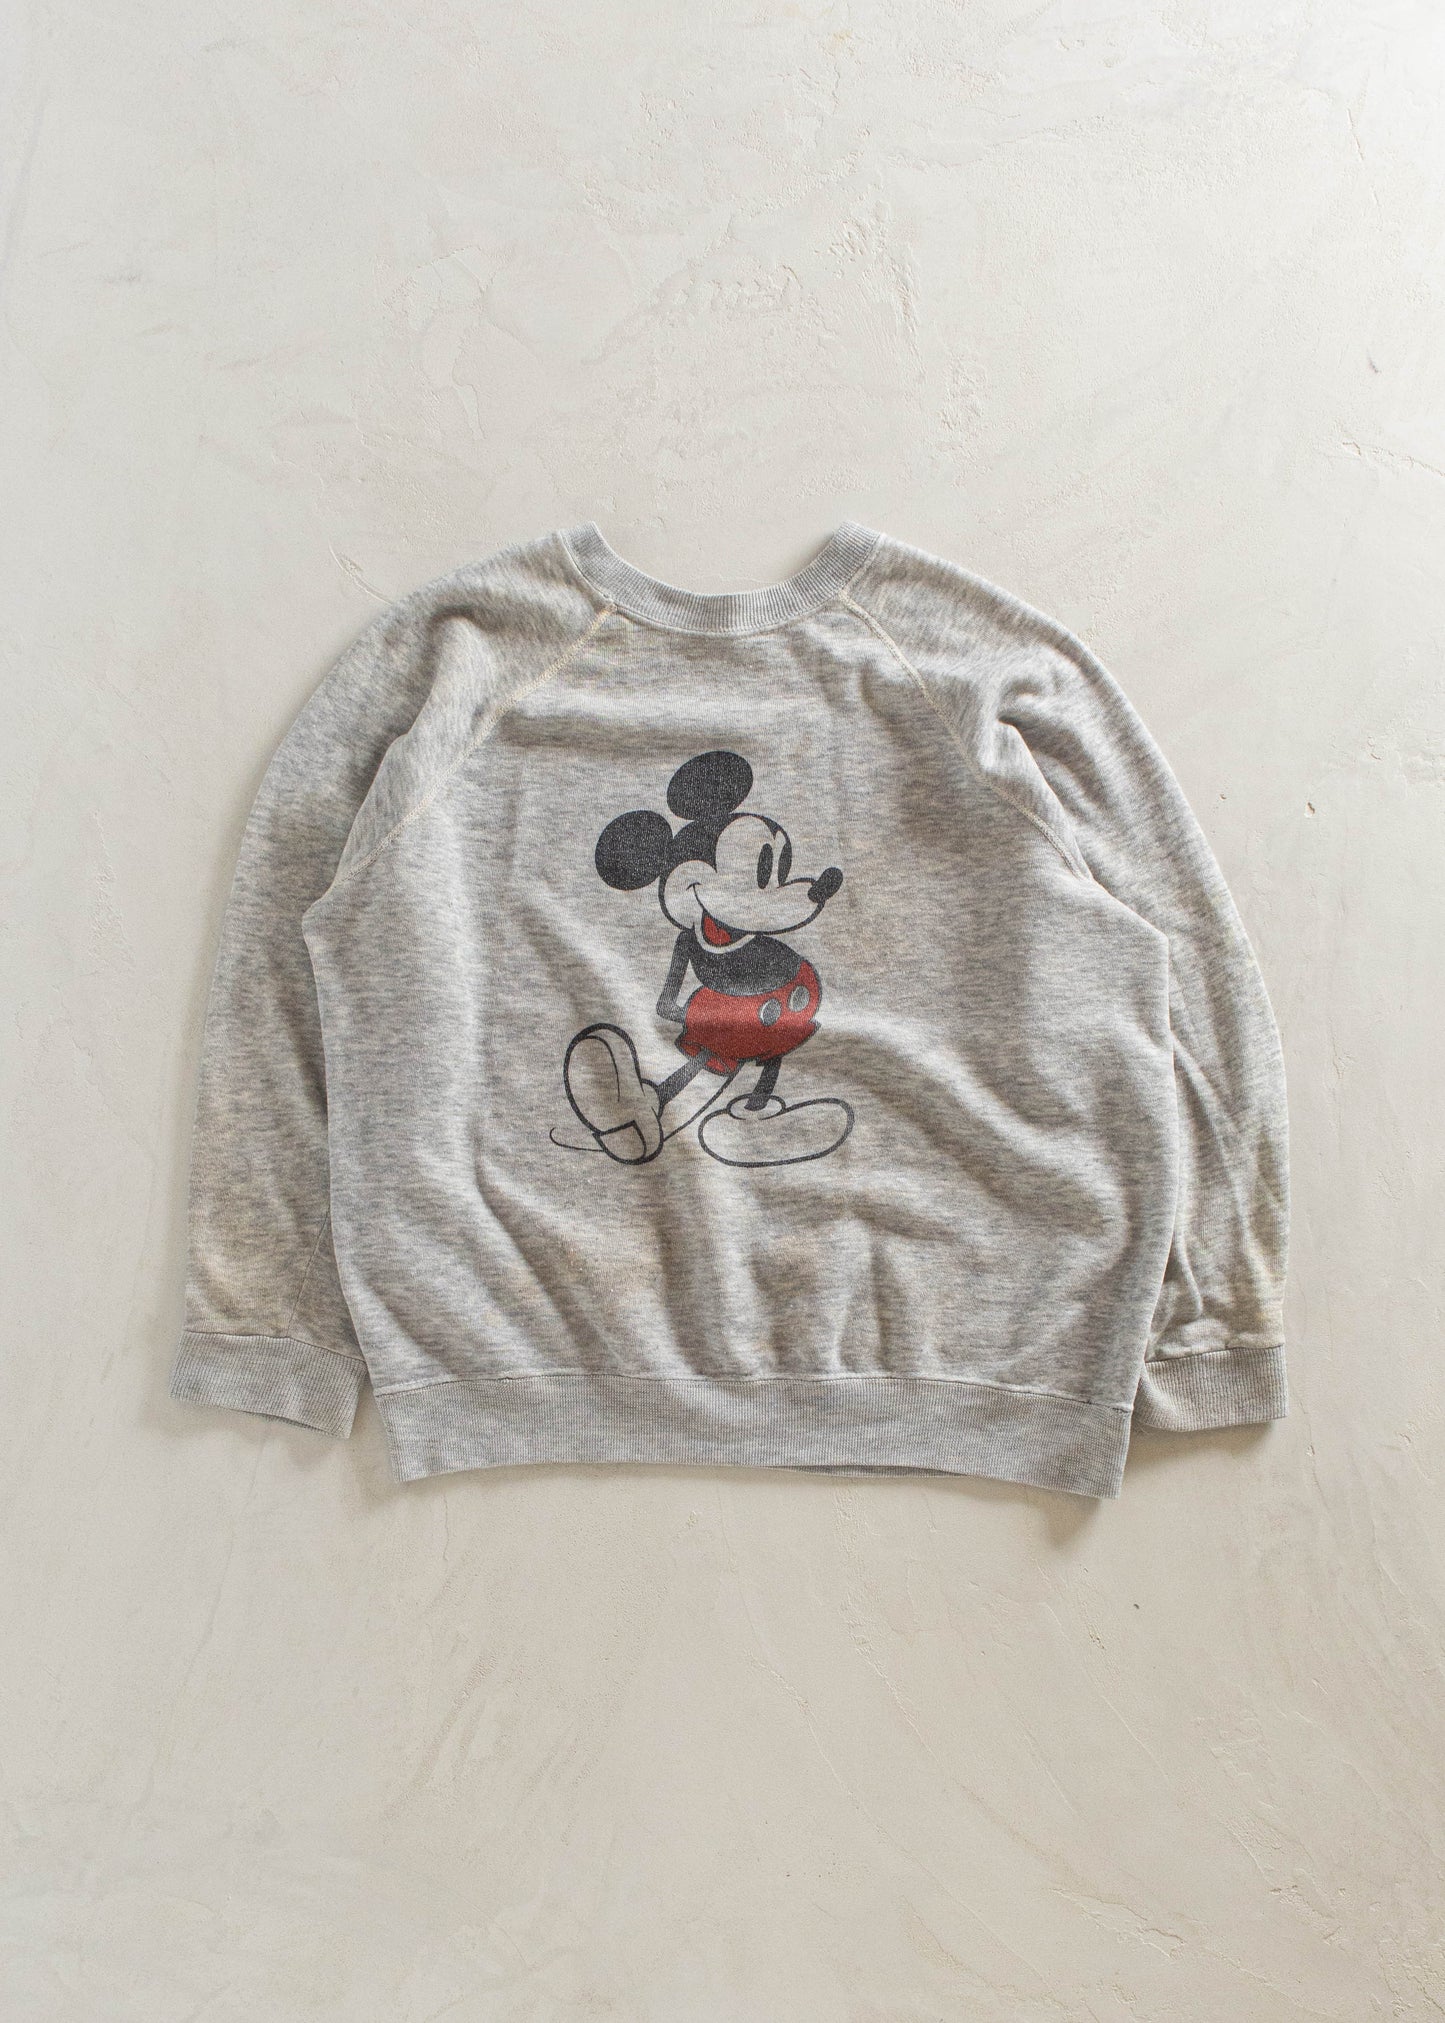 1980s Walt Disney Mickey Mouse Sweatshirt Size M/L